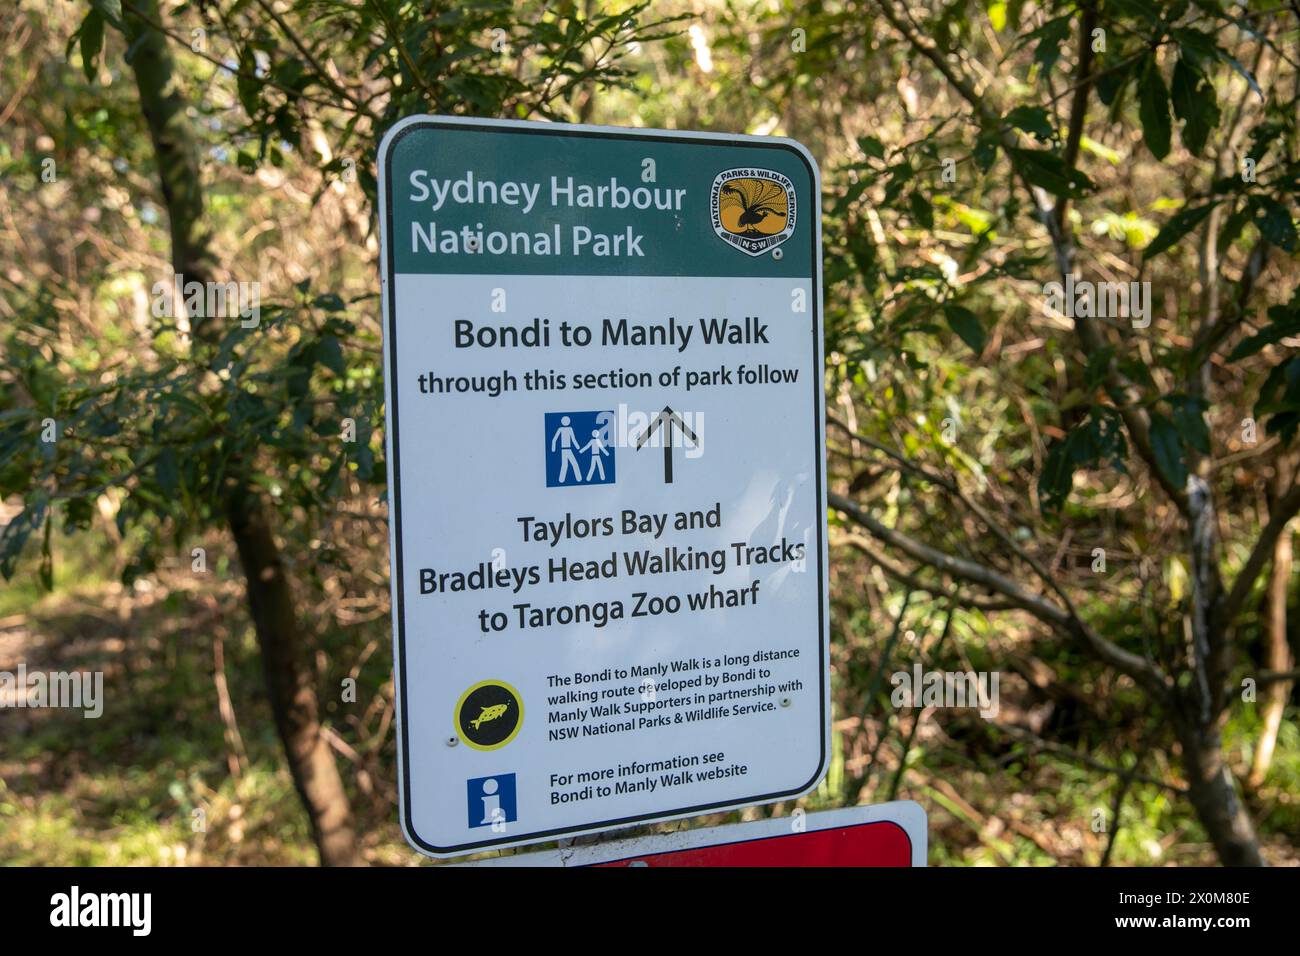 Sydney Harbour National park, Bondi to manly coastal walk, heading towards Taylors Bay, Bradleys head and Taronga zoo wharf, Sydney,NSW,Australia Stock Photo